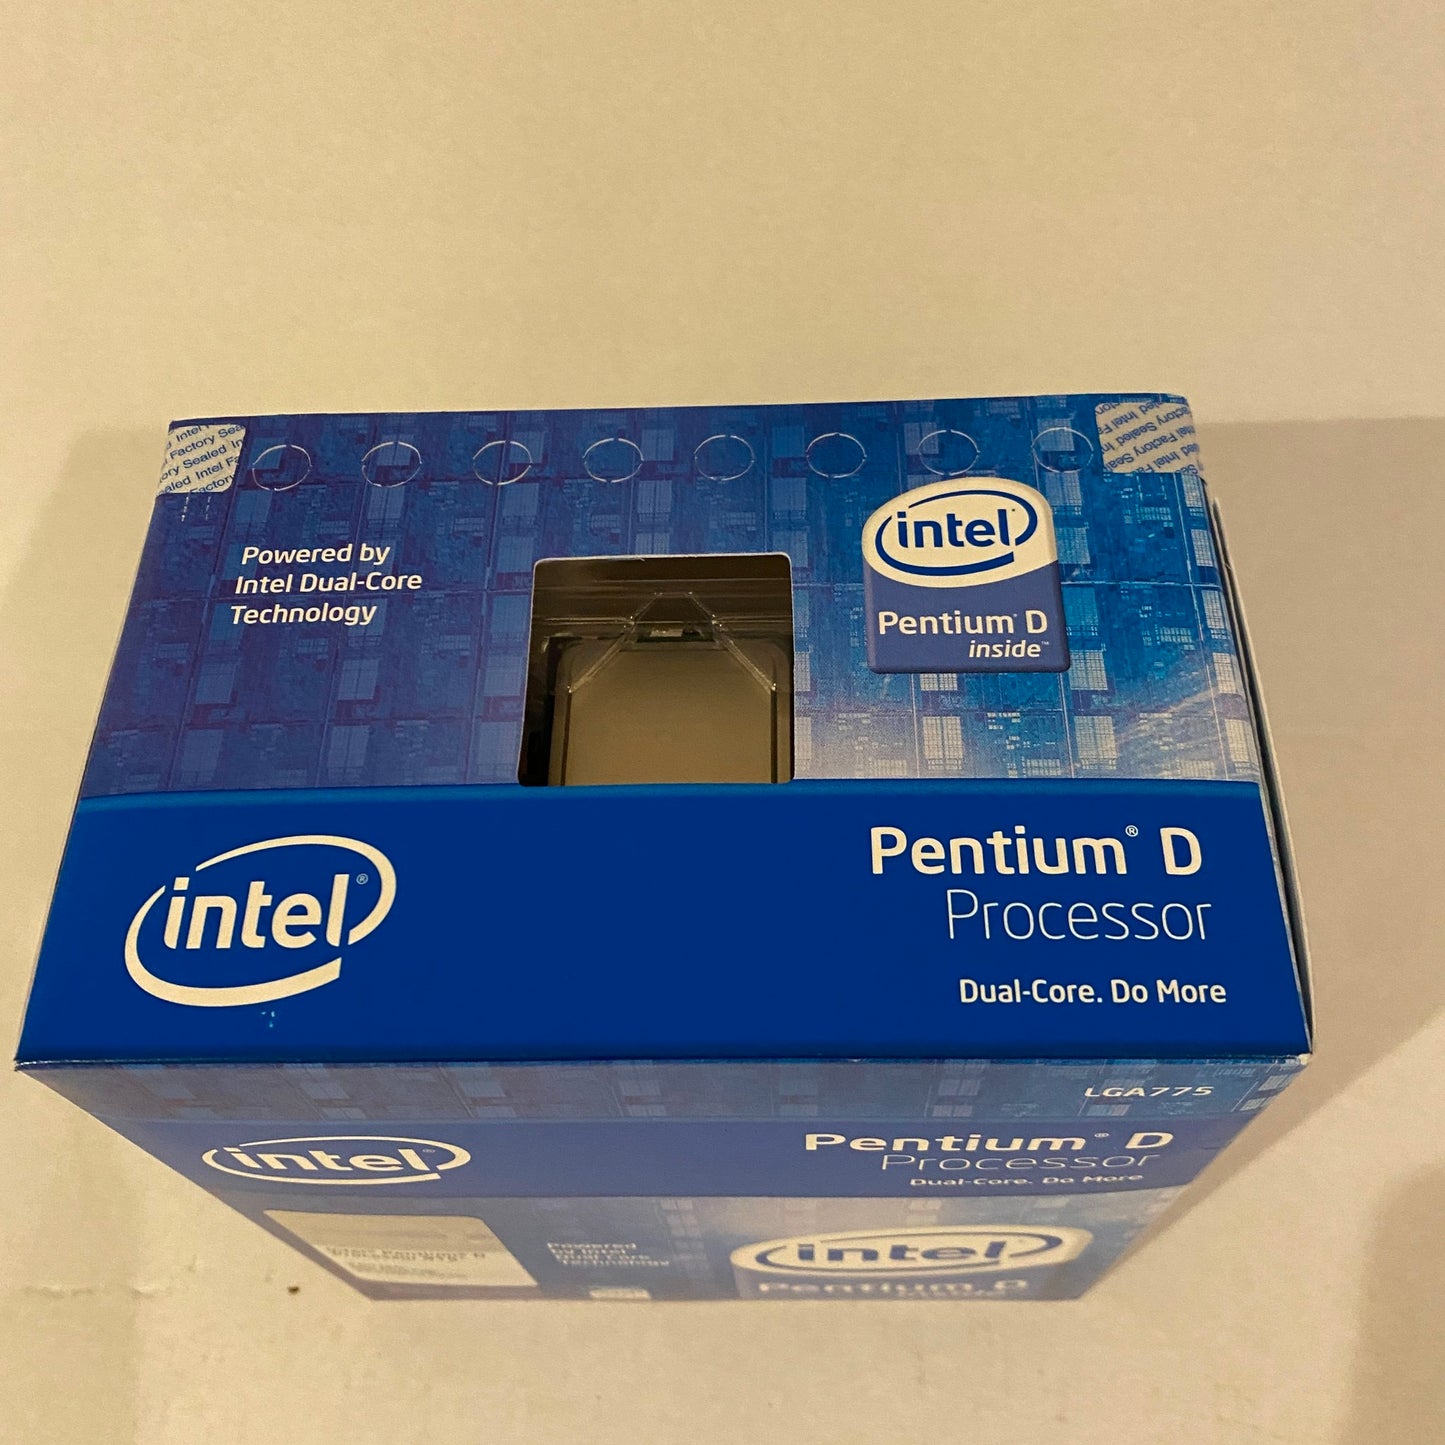 New Intel Pentium D Processor 915 2.80 Ghz with Heatsink and Fan - LGA775